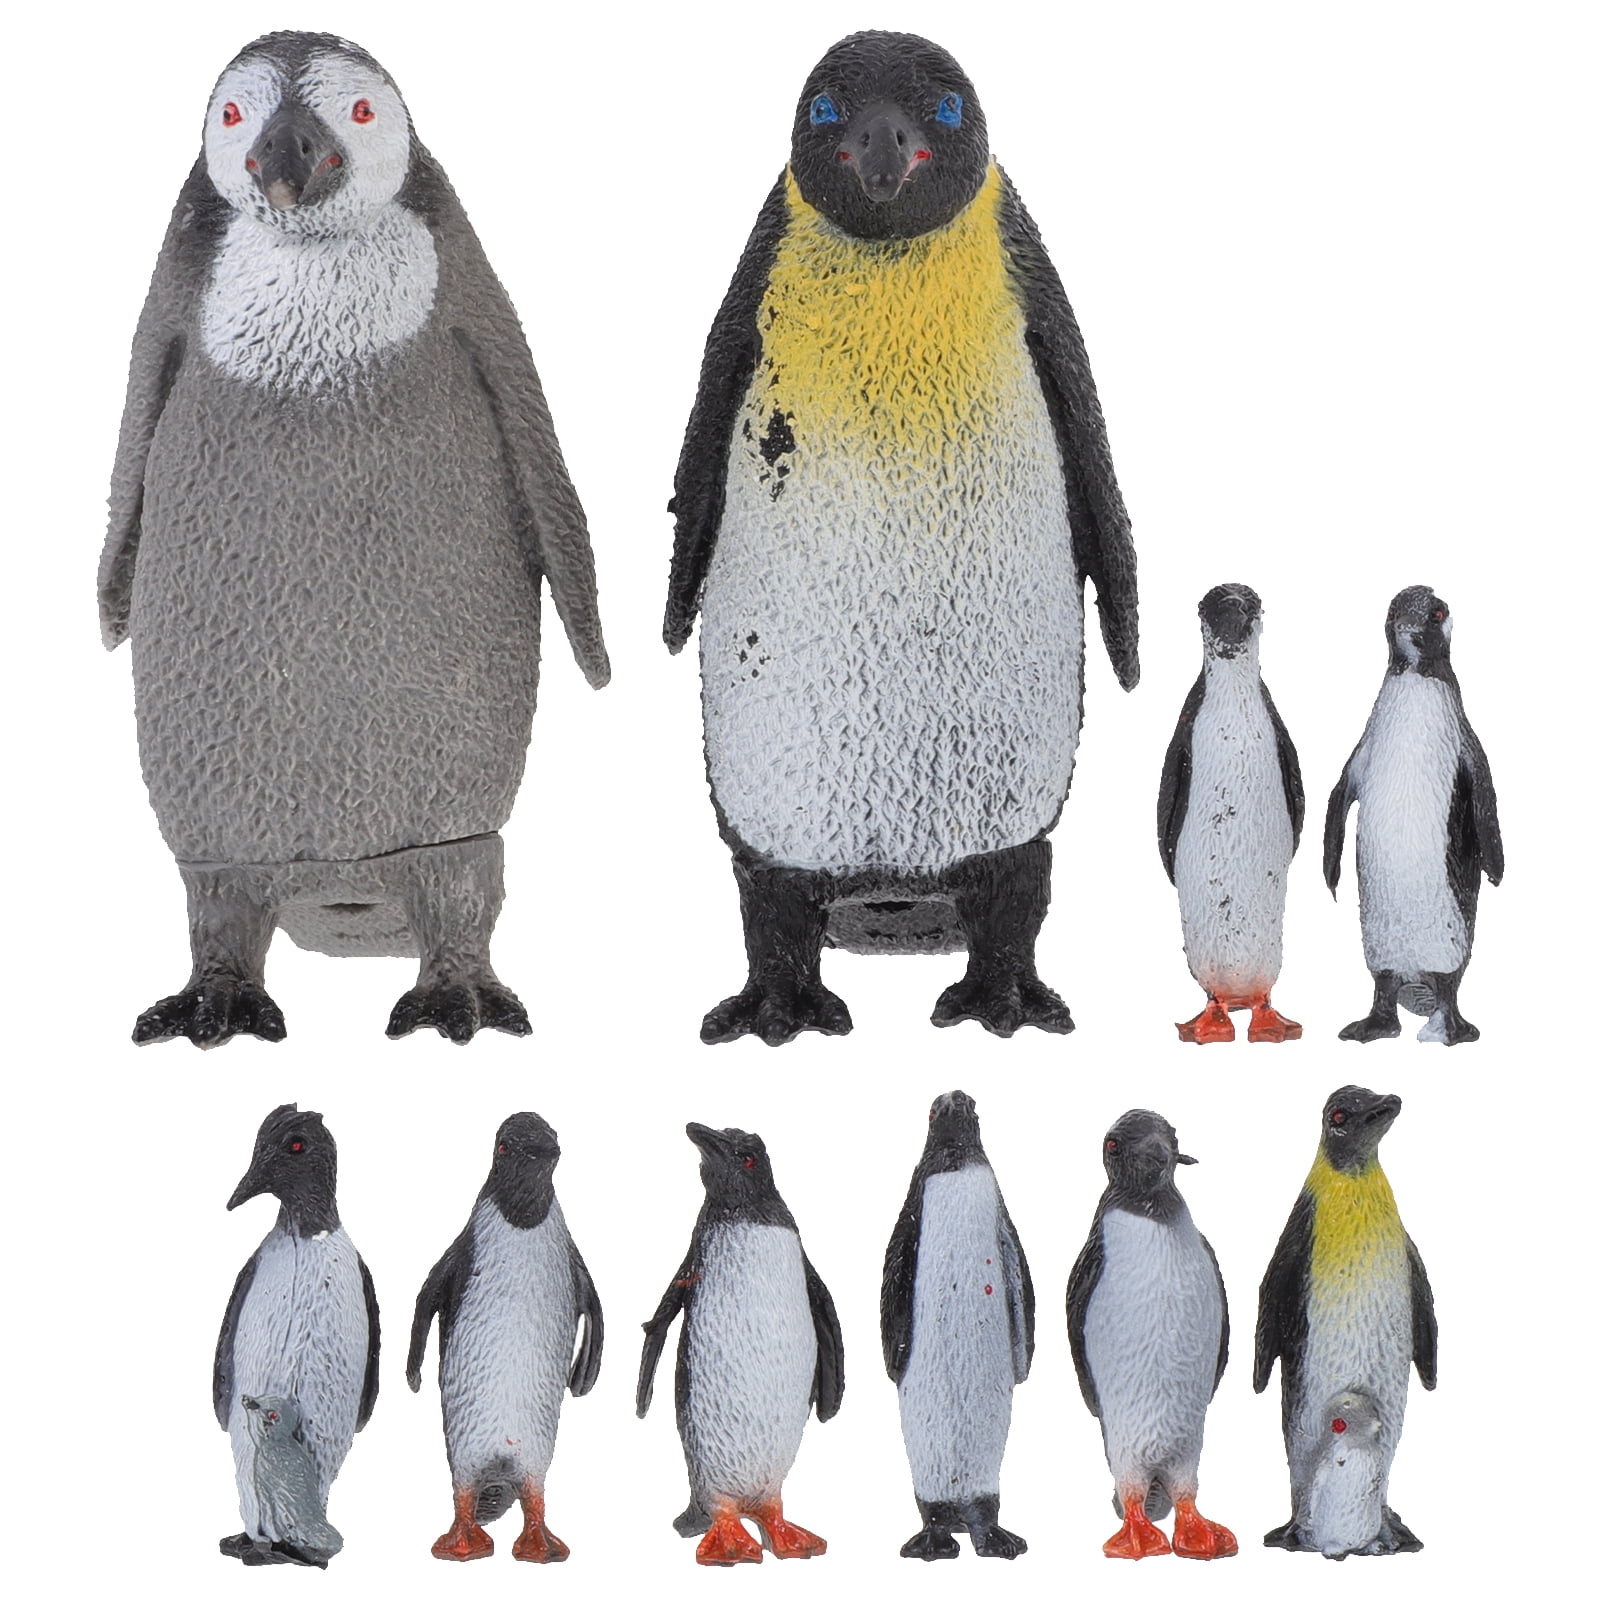 Penguin Marine Polar Life Model Animal Simulation Model Learning Kids Toy N7 